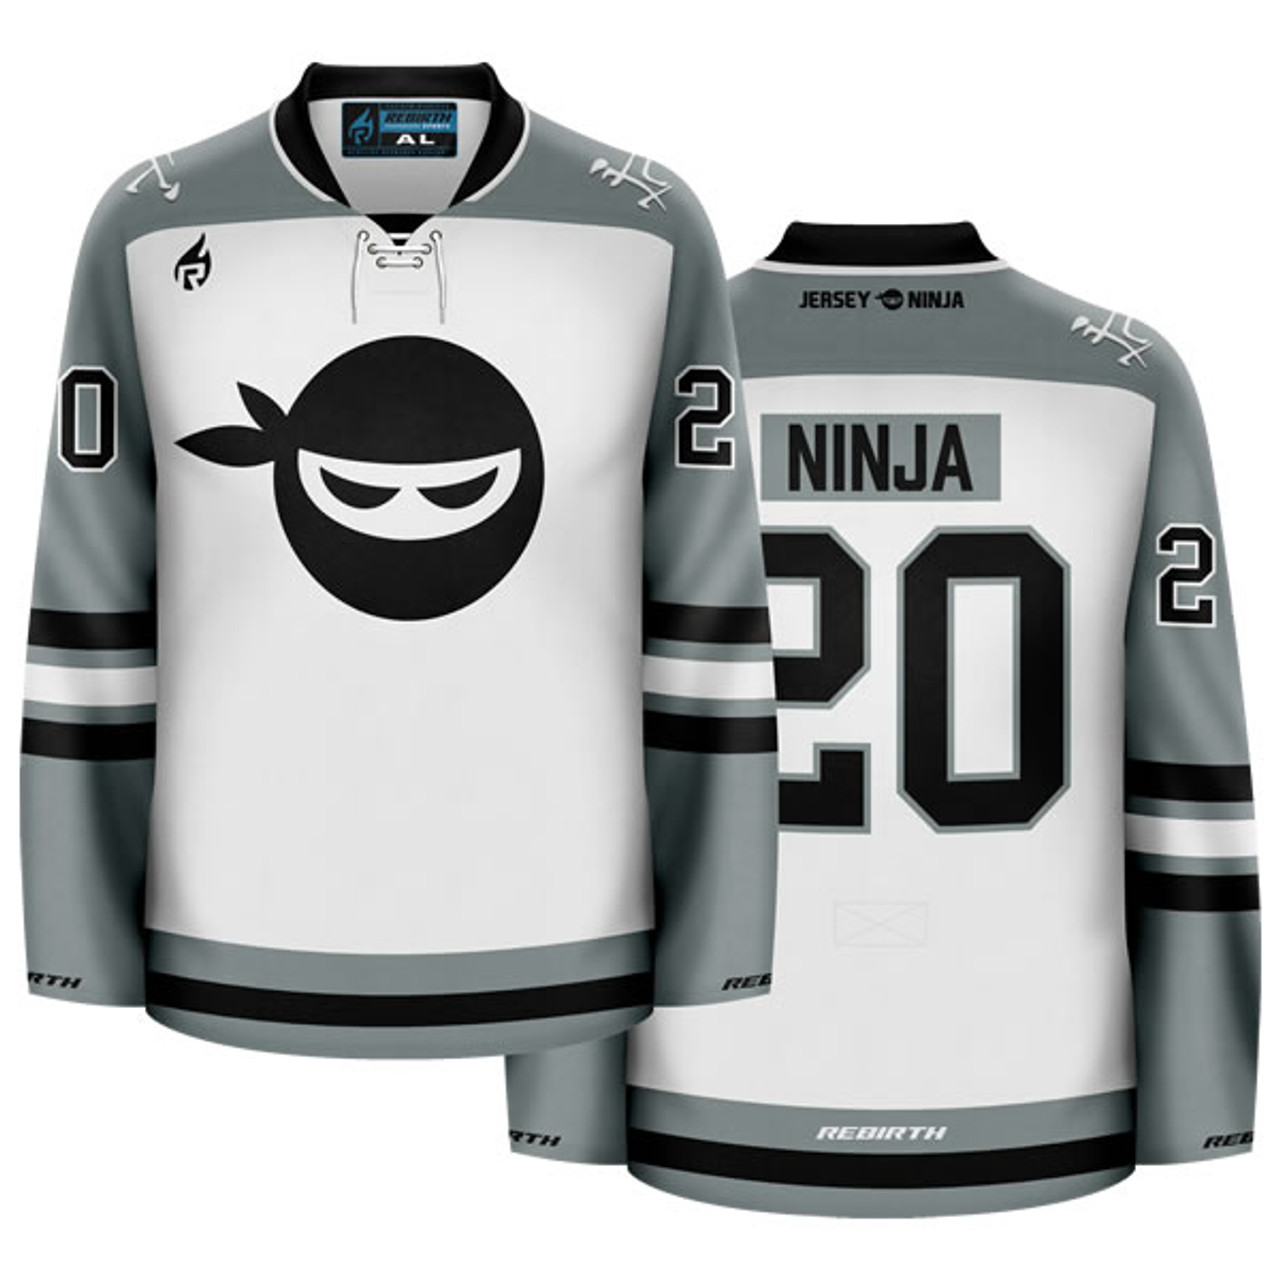 Jersey Ninja - Kansas City Chiefs White Hockey Jersey